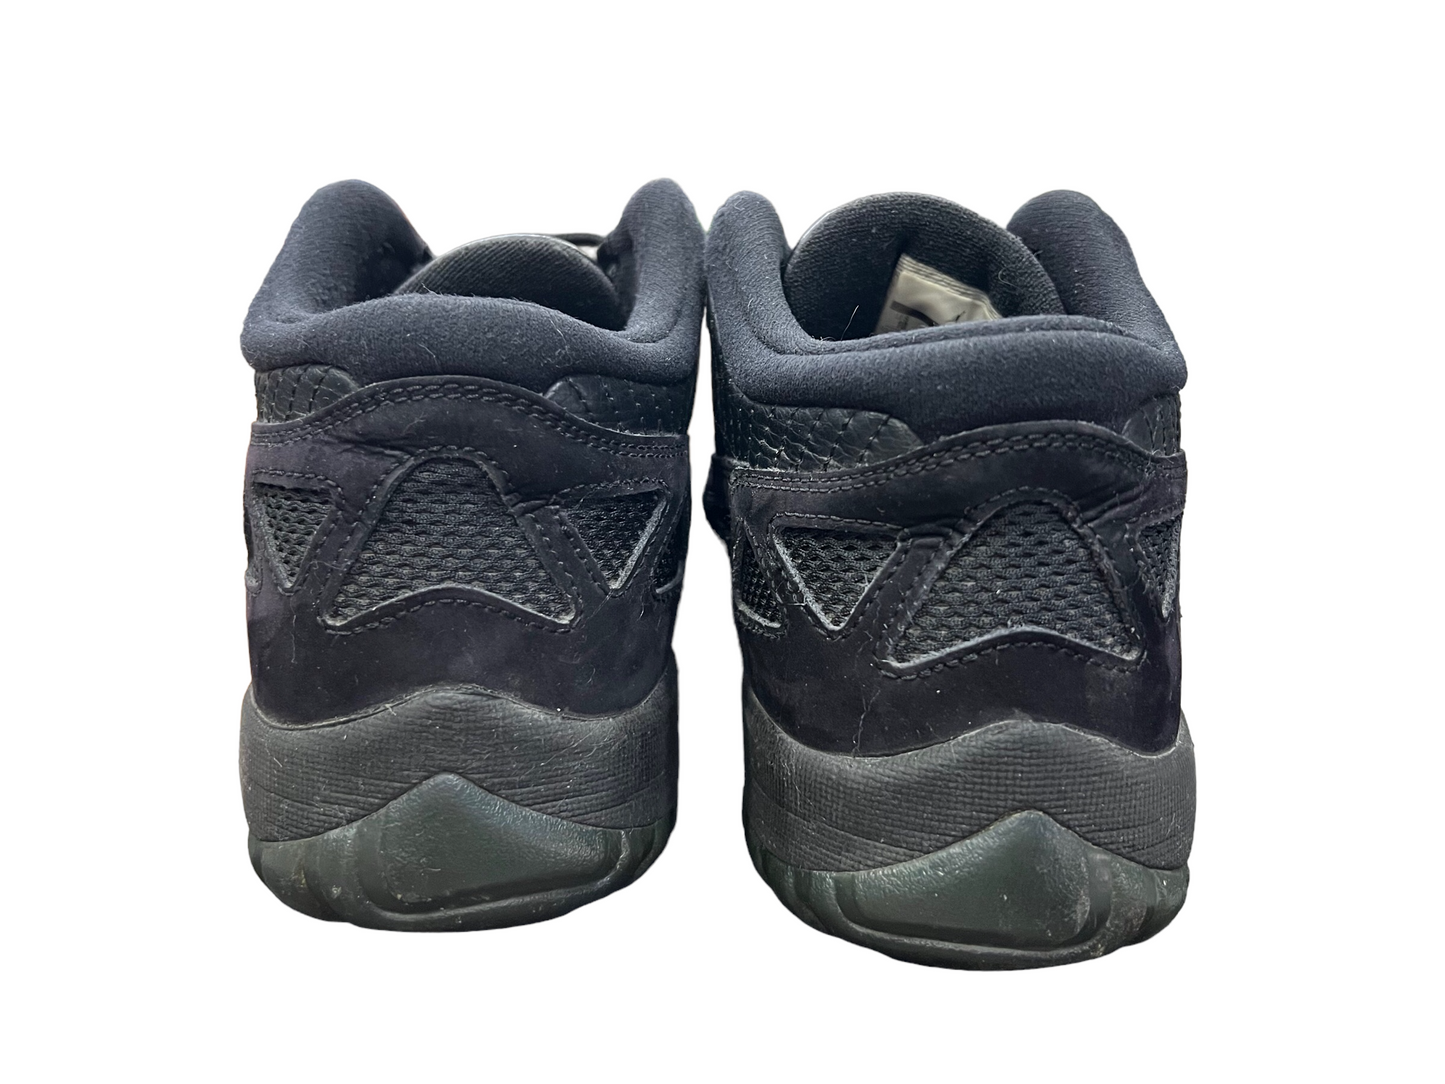 Air Jordan 11 IE Size 10